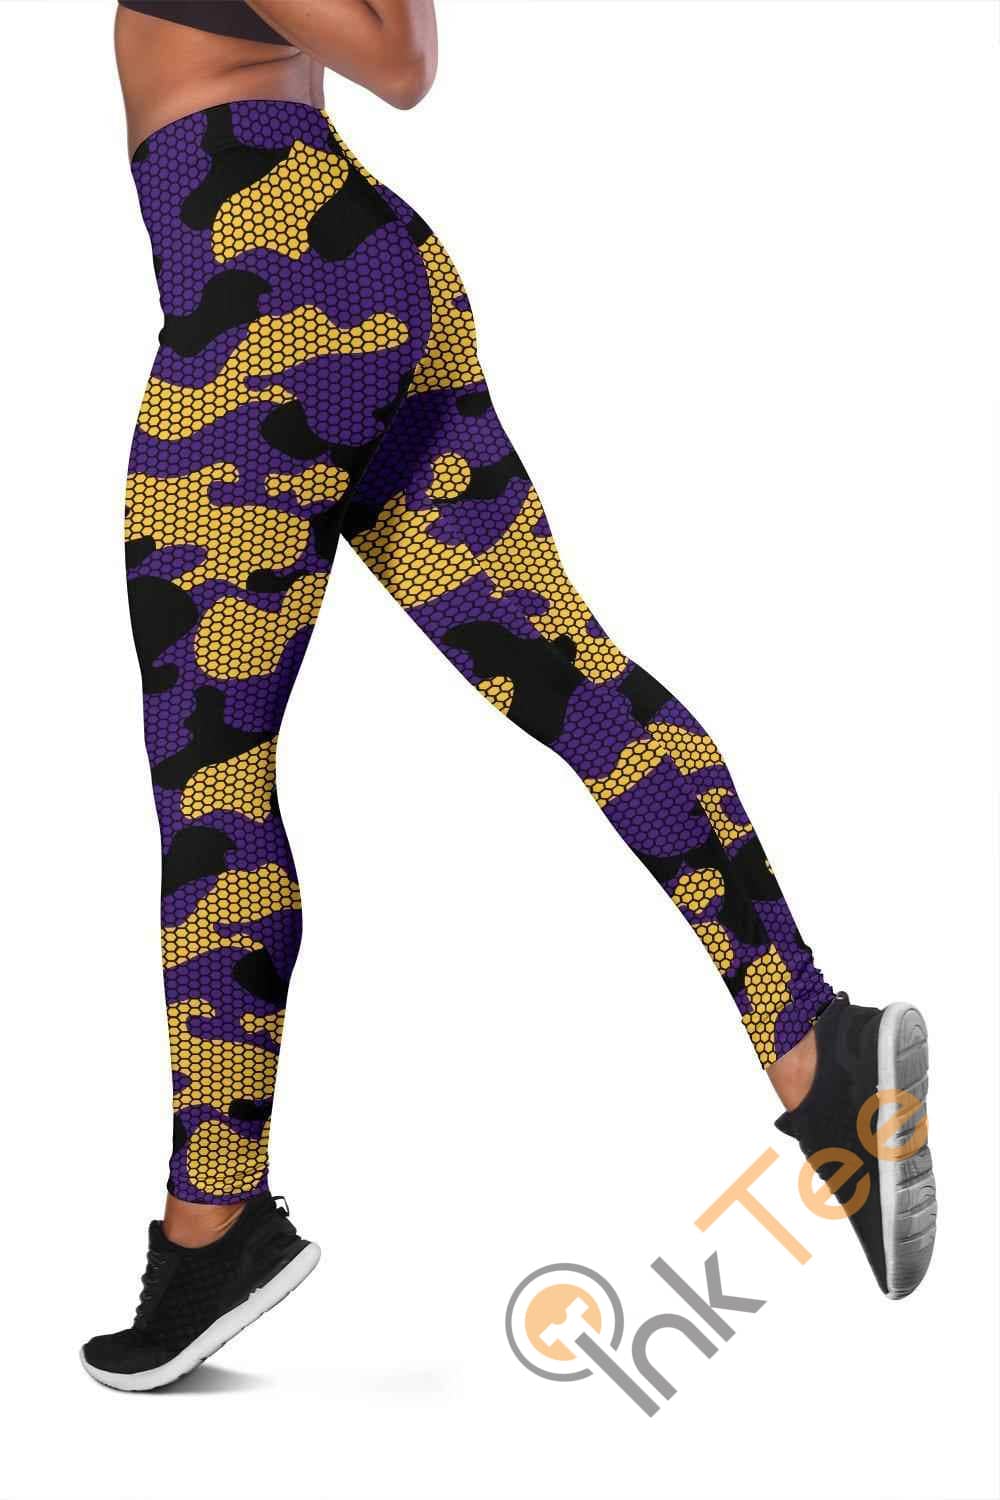 Inktee Store - Minnesota Vikings Inspired Hex Camo 3D All Over Print For Yoga Fitness Fashion Women'S Leggings Image